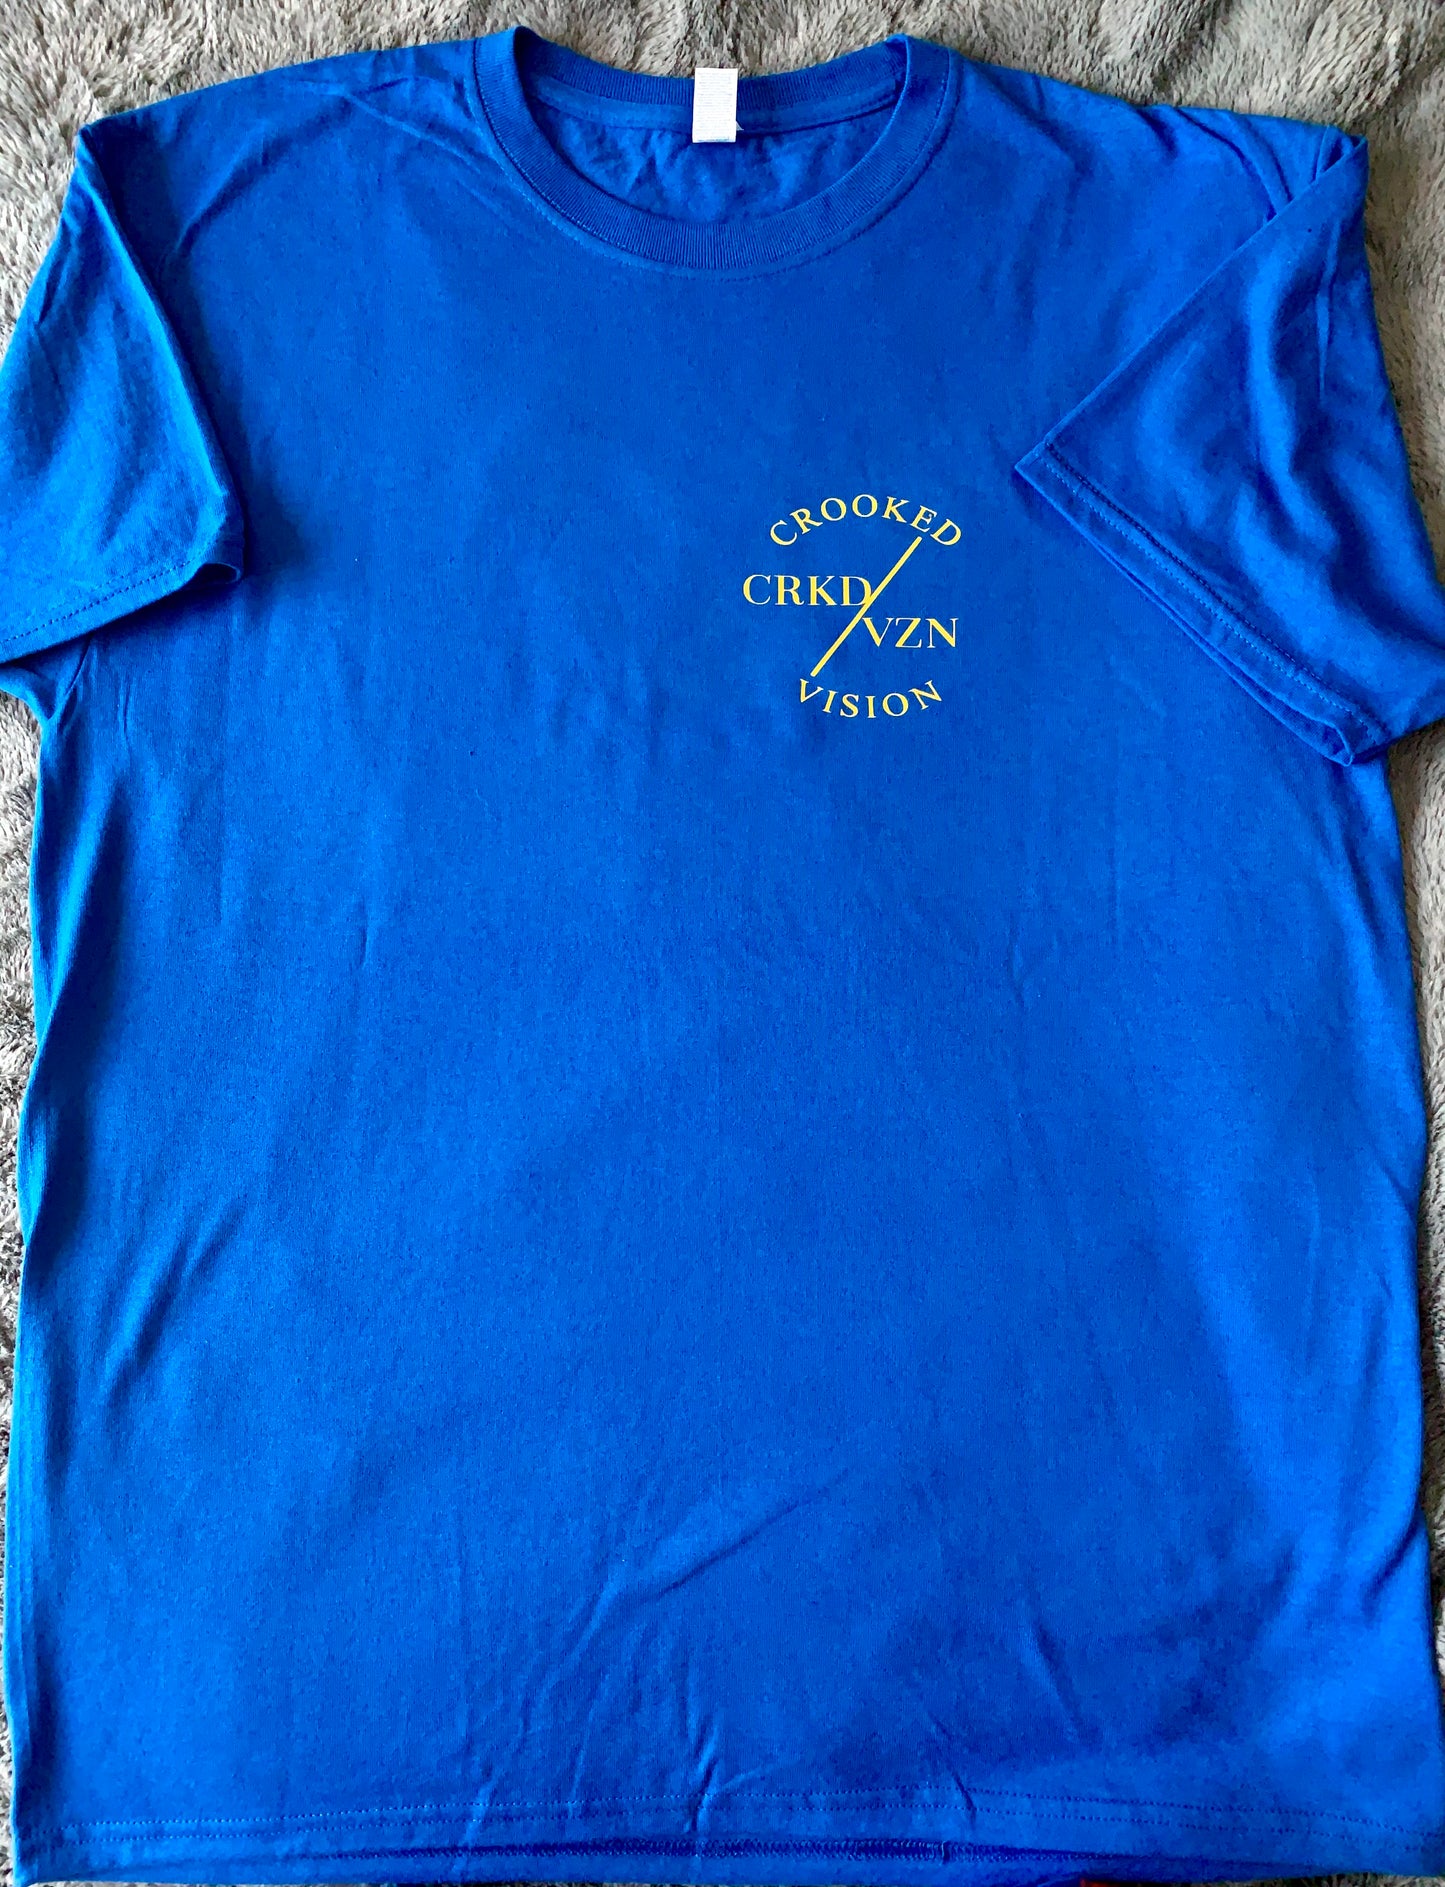 Blue CRKD/VZN Shirt